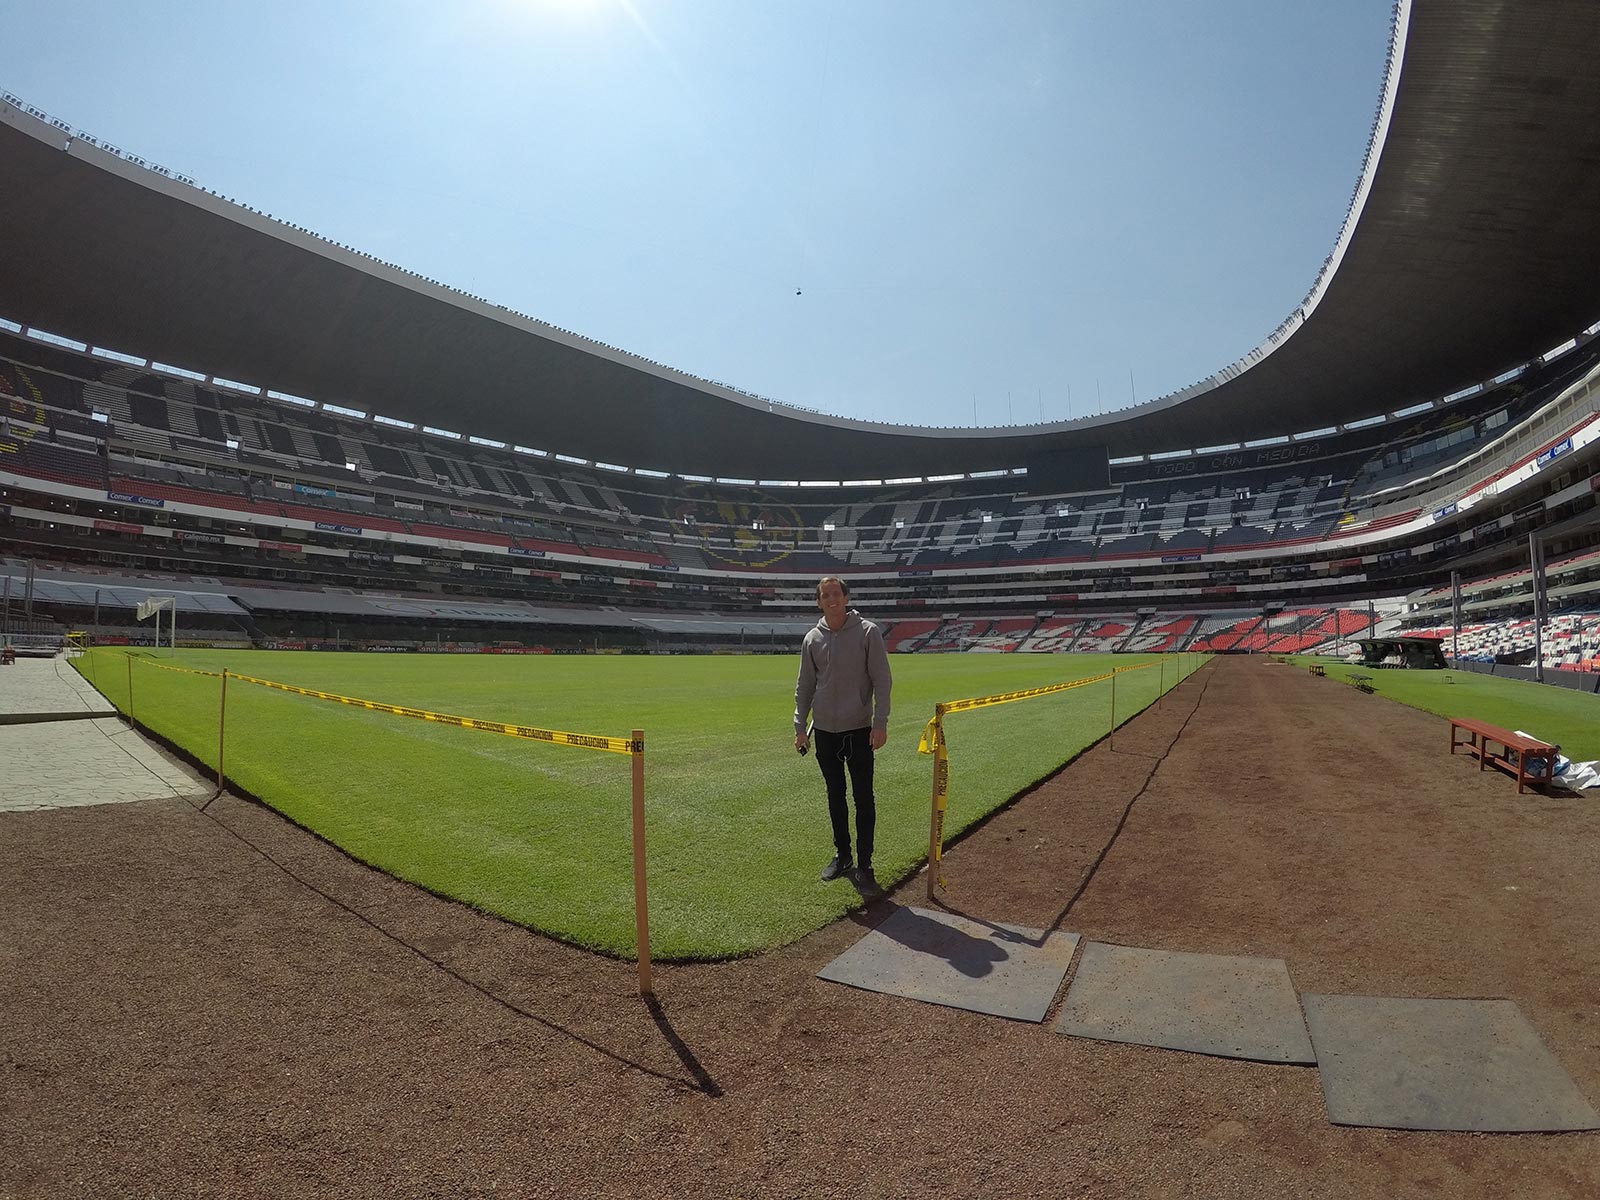 David Simpson at Azteca Stadium in Mexico City, Mexico. Mexico City & Teotihuacan